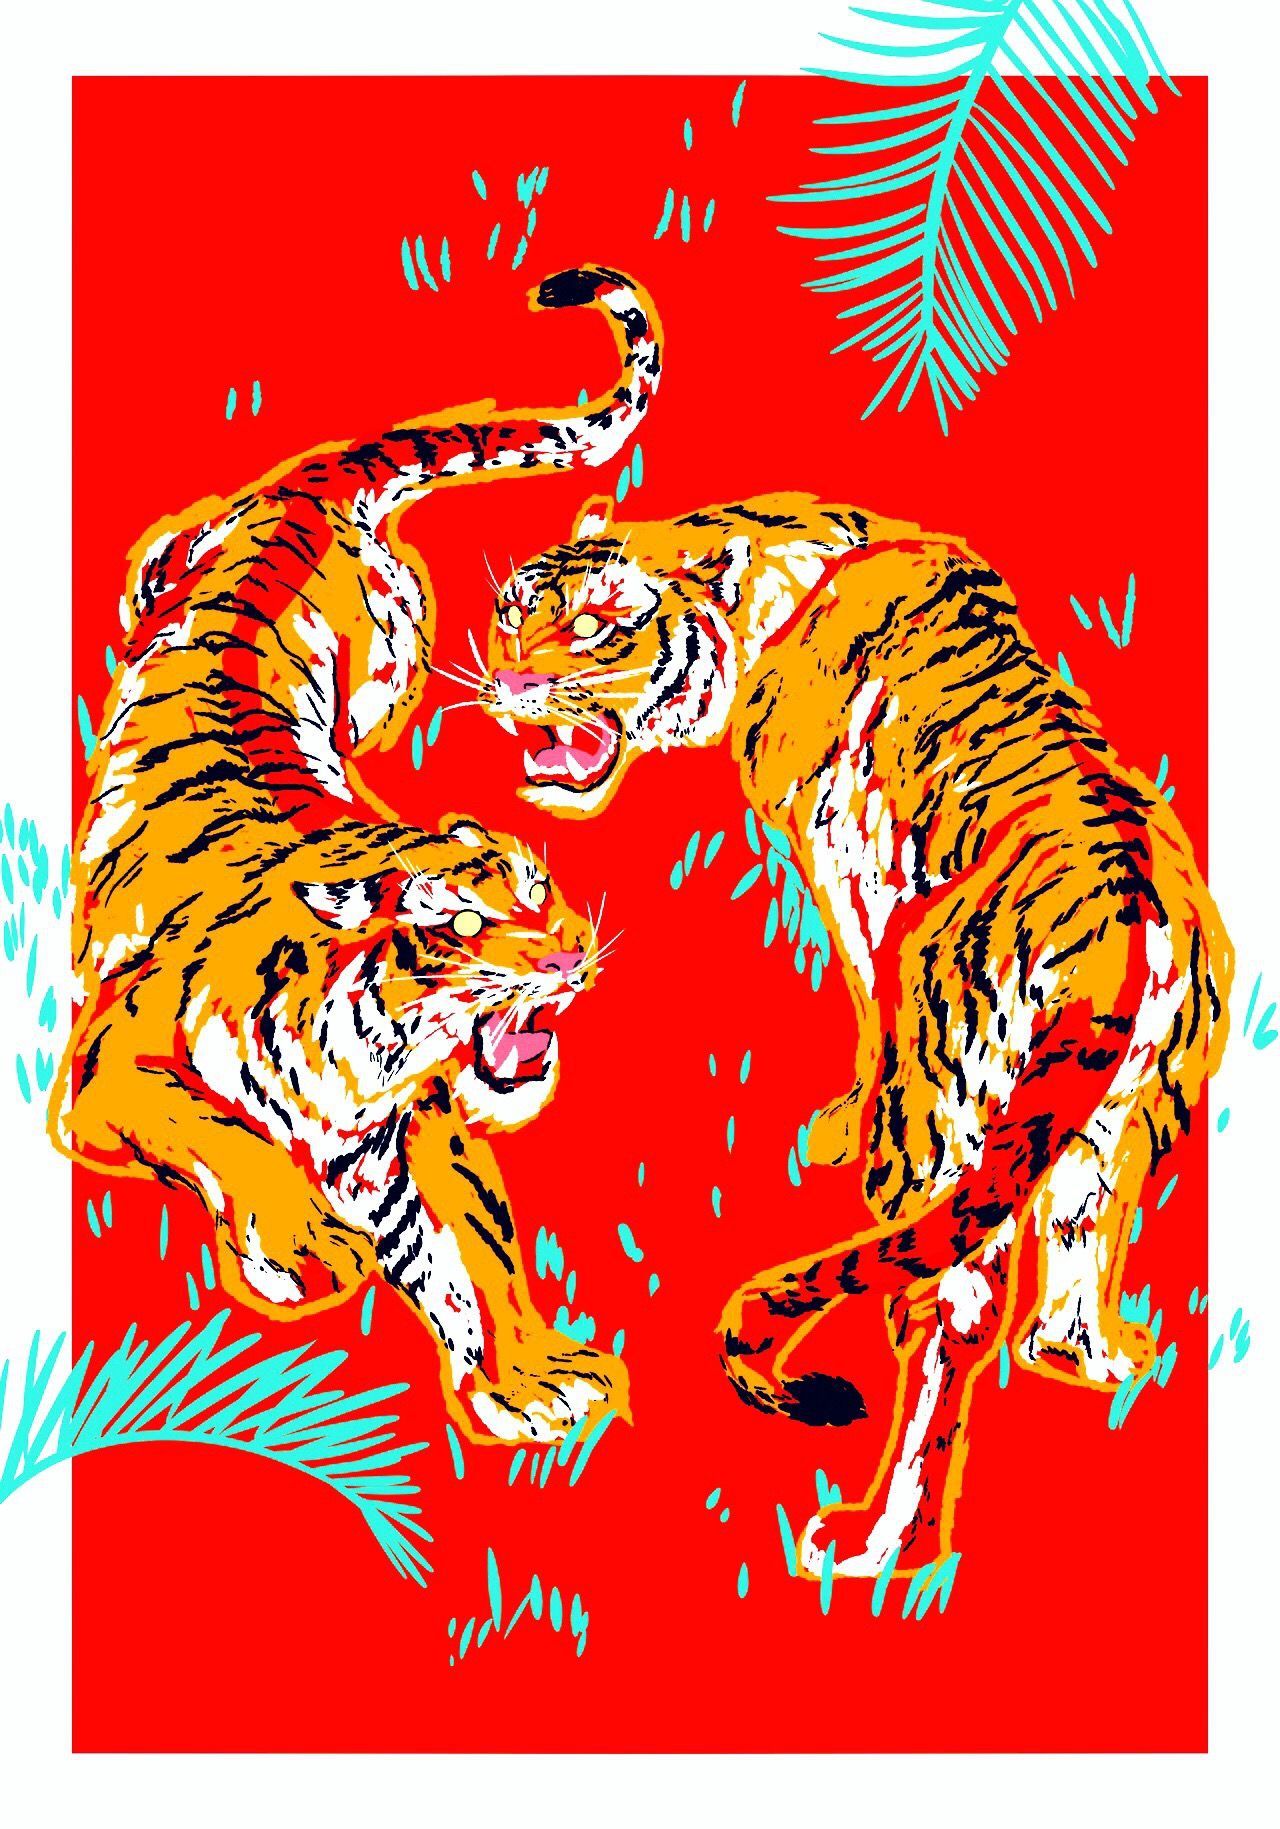 tiger tumblr background